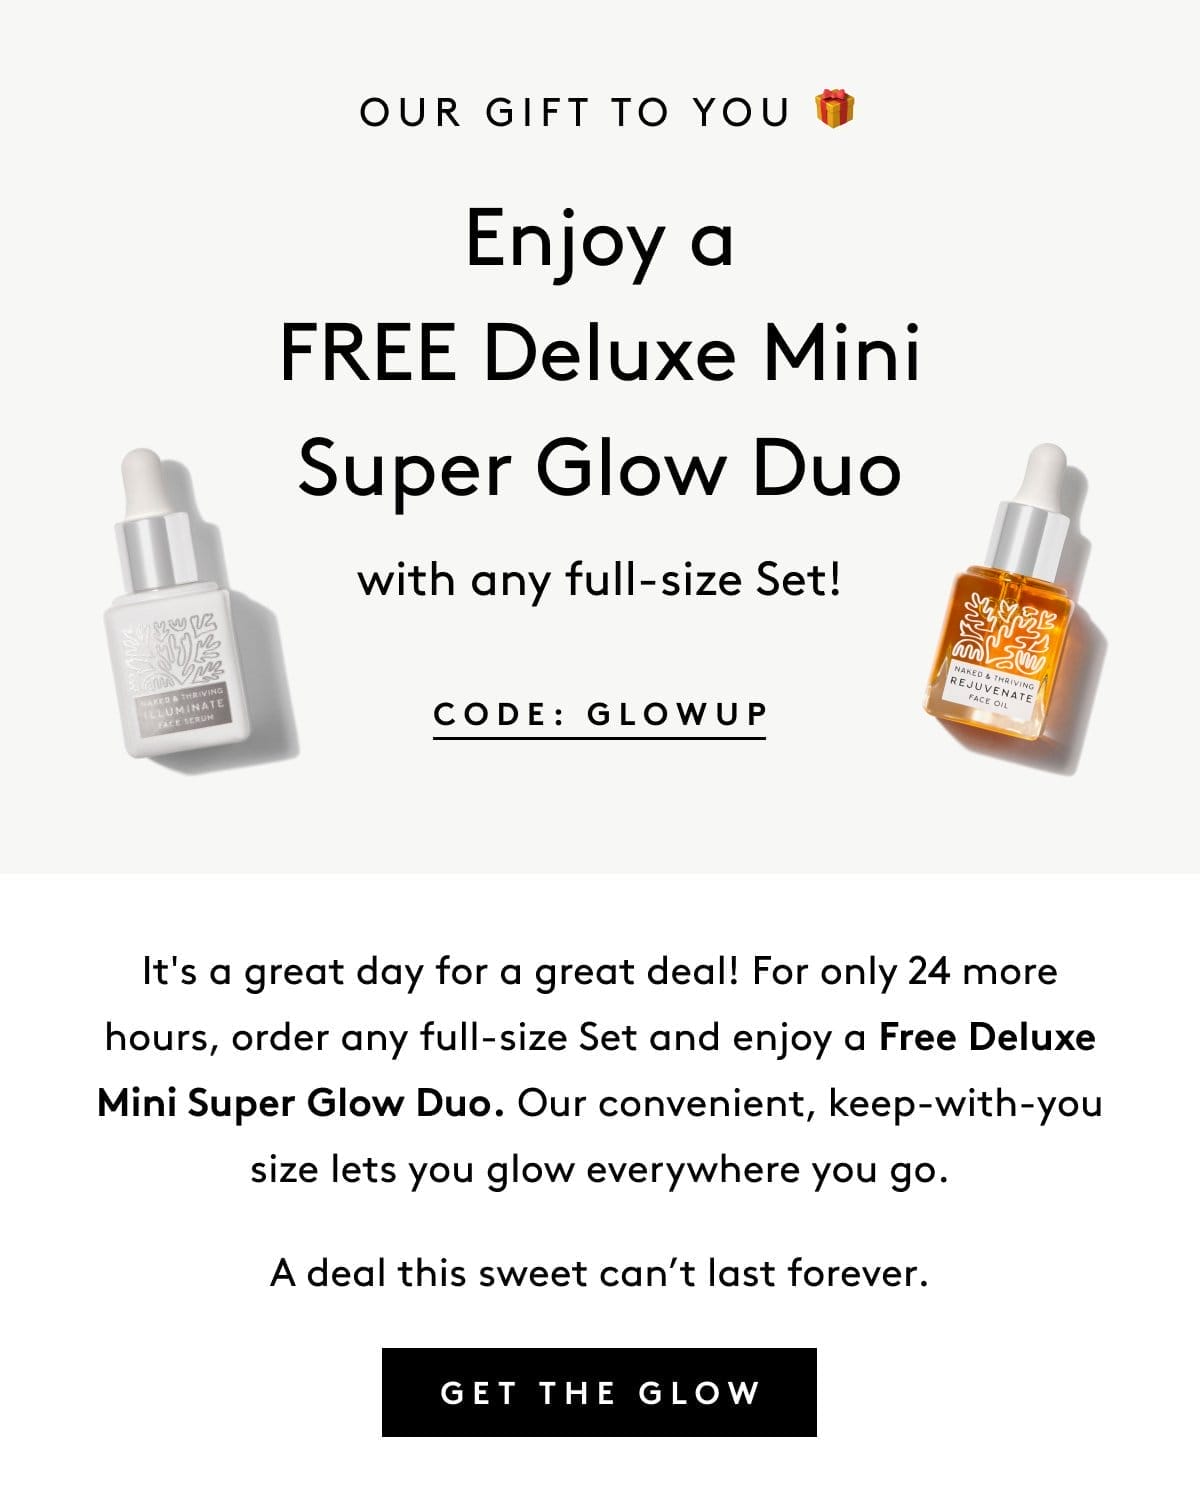 Enjoy a Free Deluxe Mini Super Glow Duo